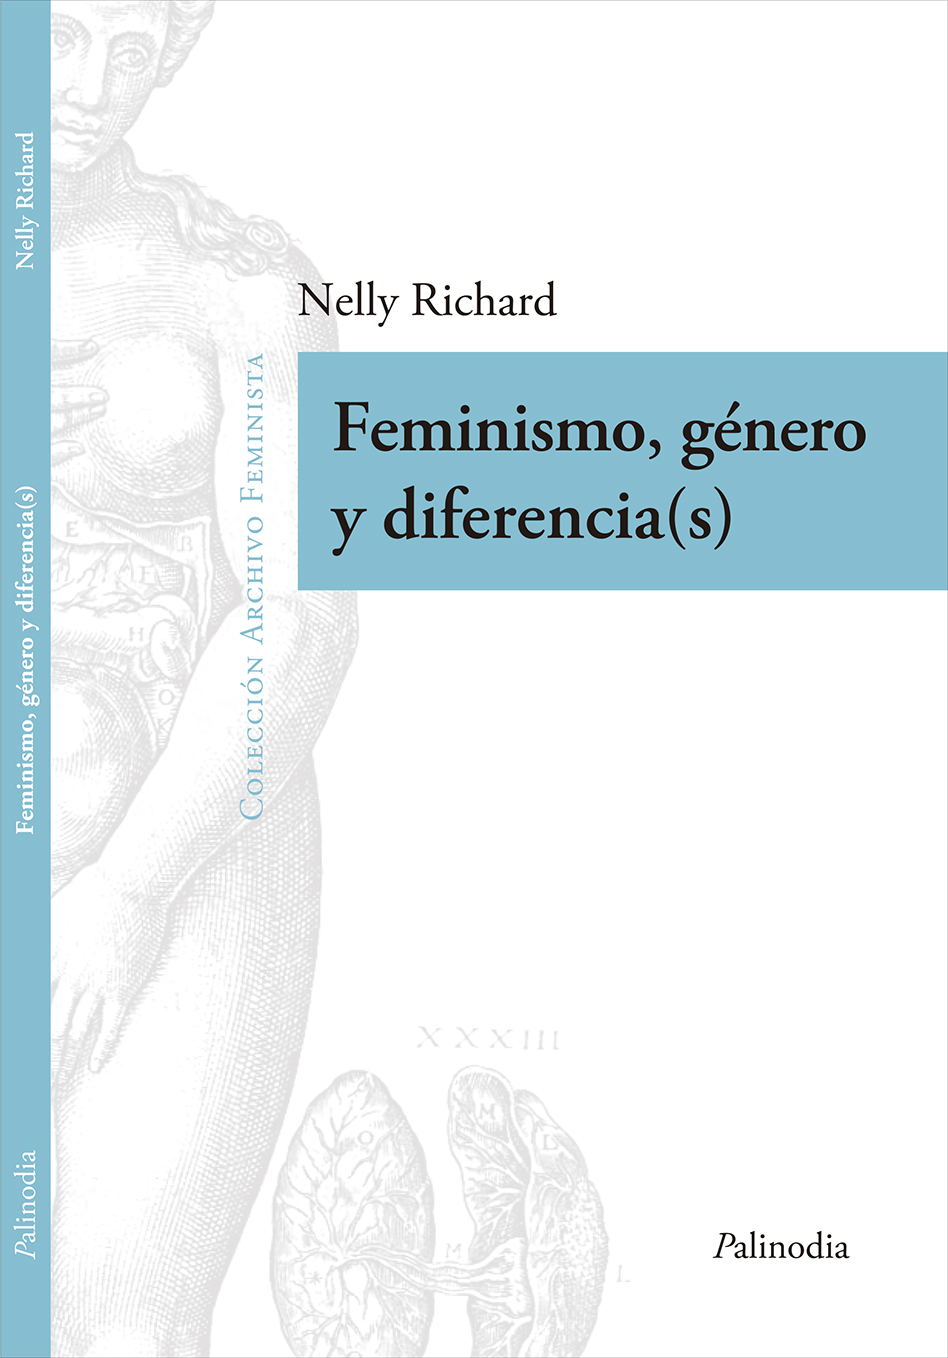 Feminismos, género y diferencias_NRichard_Trazo